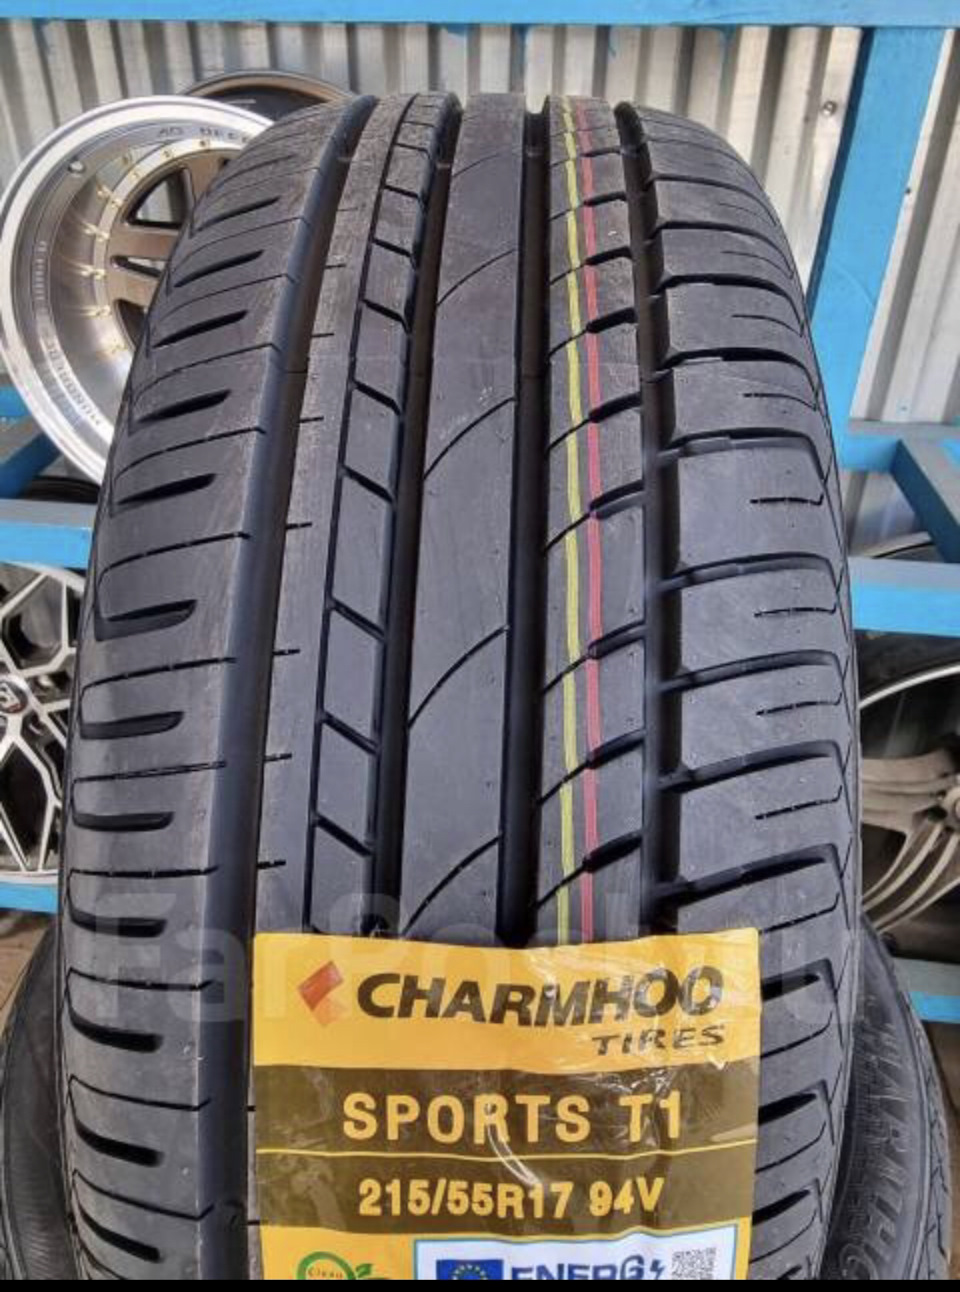 Charmhoo sports t1 отзывы. Charmhoo Sports t1 шины. 245/45zr17 Charmhoo XL Sports t1. Charmhoo 94w Sports t1 245/40/19. Charmhoo Touring ch01 215 60 16.